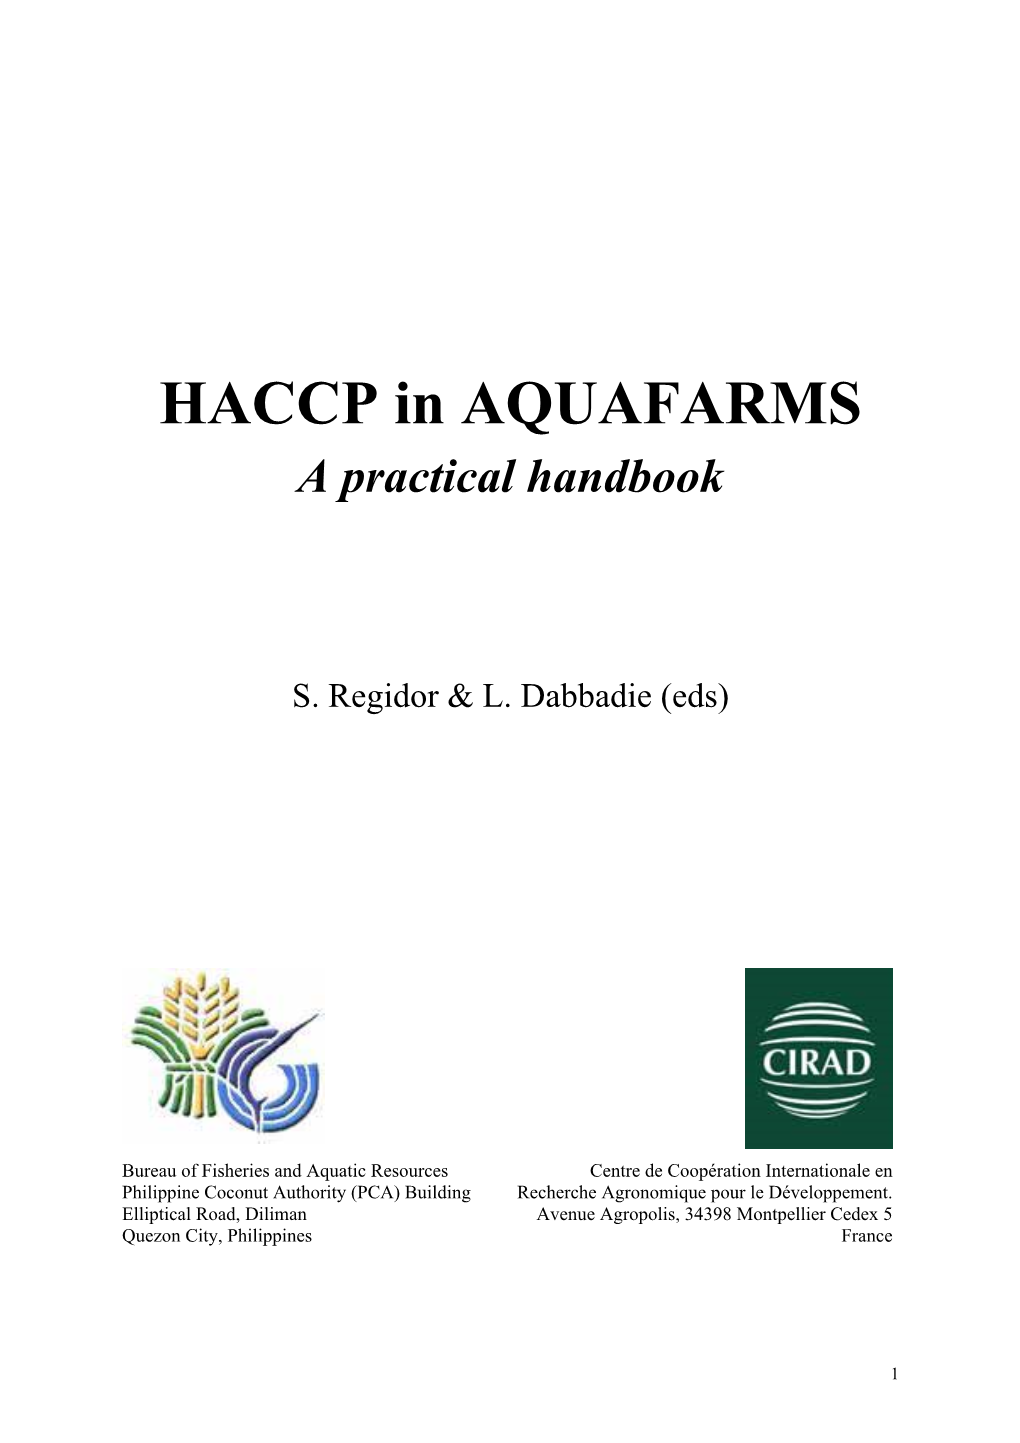 HACCP in AQUAFARMS a Practical Handbook